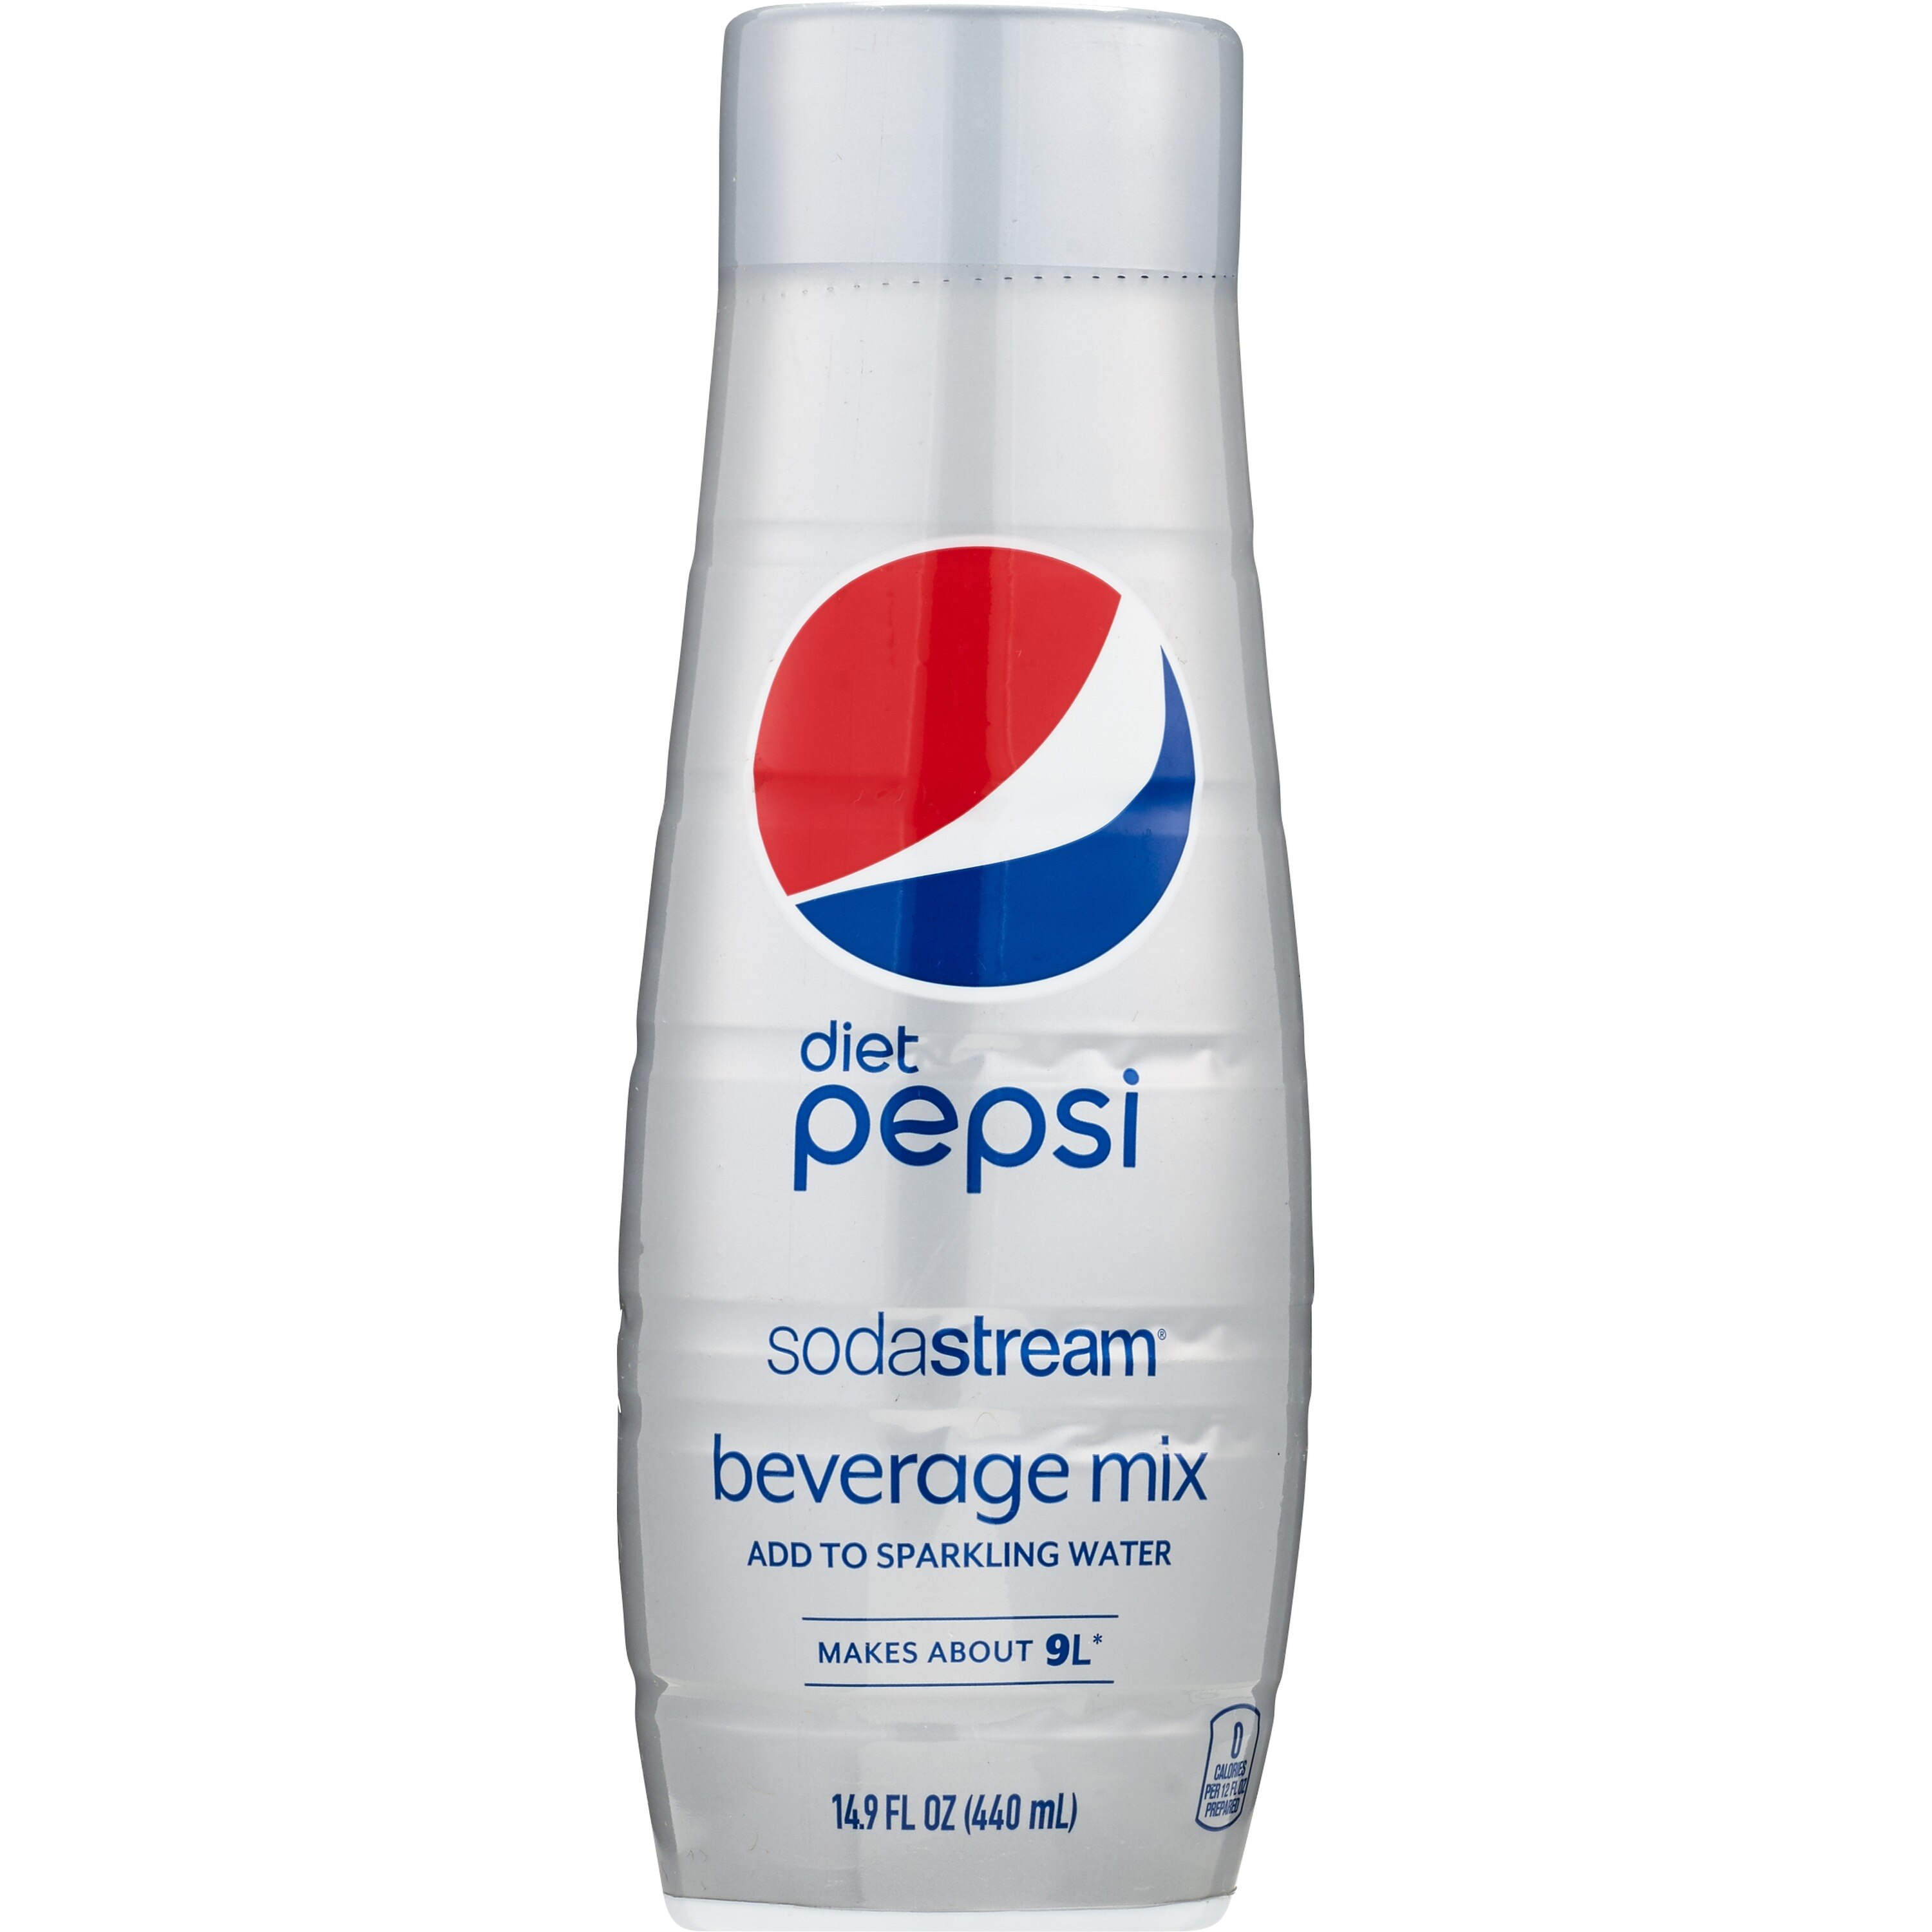 SodaStream Diet Pepsi Beverage Mix, 14.9 fl oz